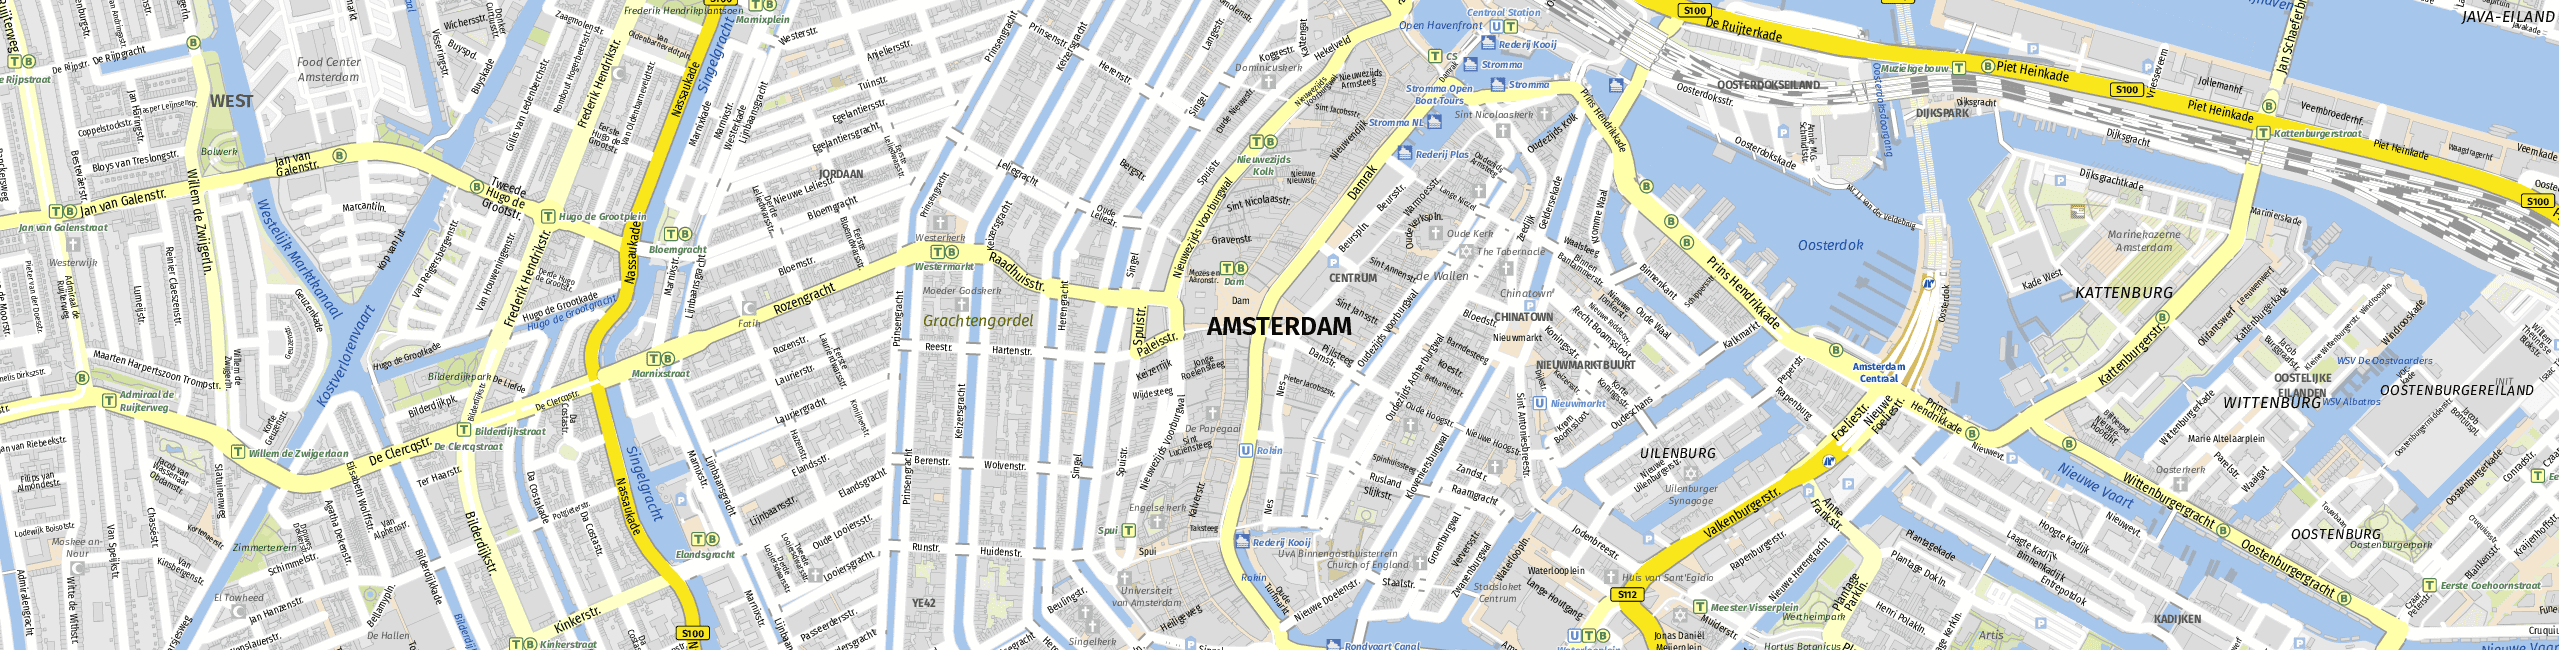 Stadtplan Amsterdam zum Downloaden.